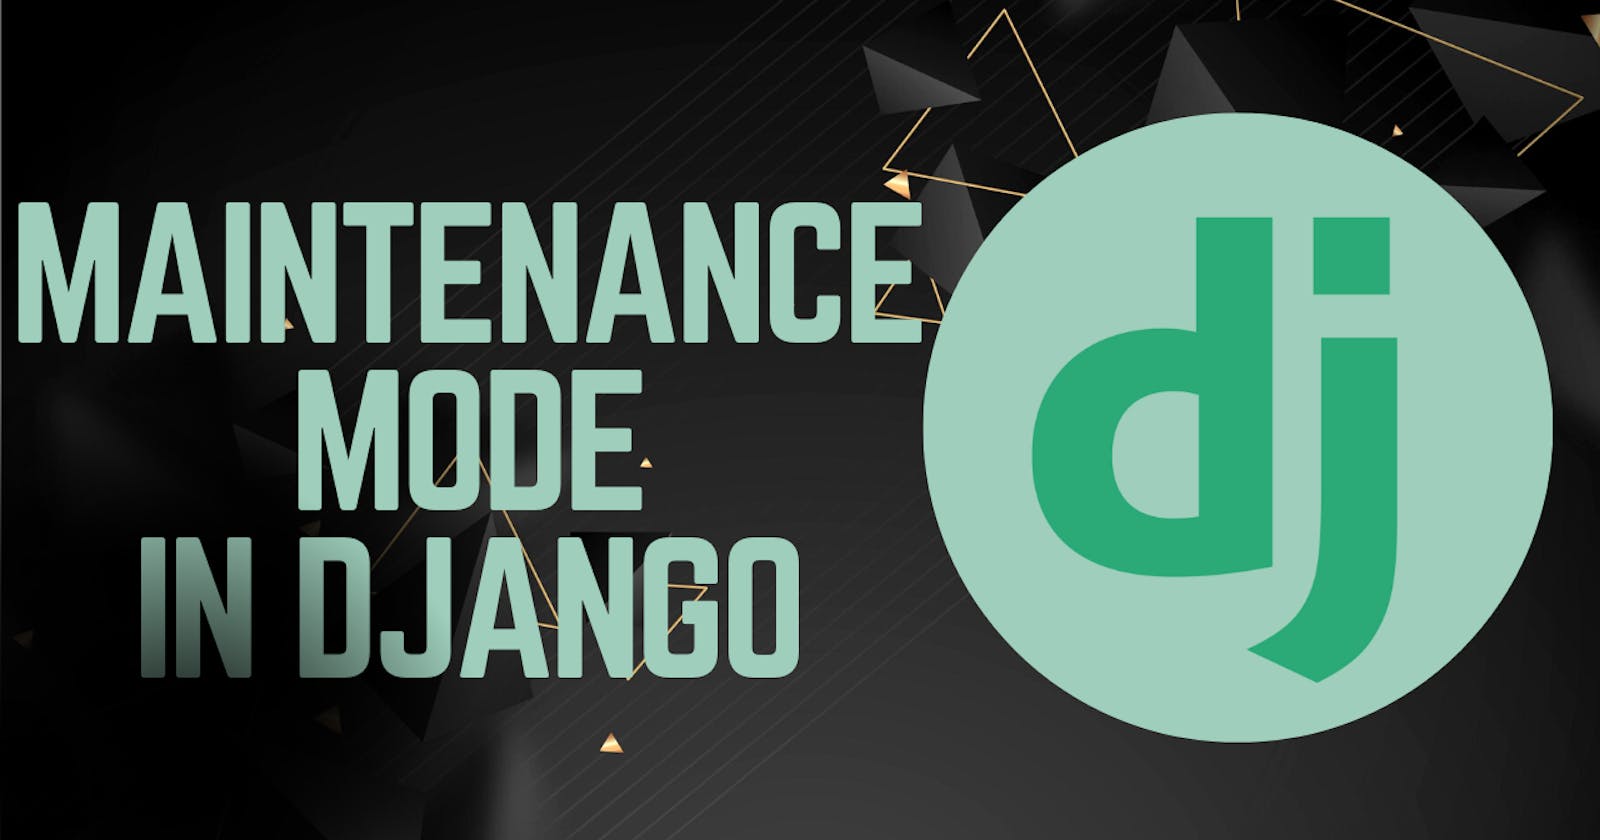 Maintenance mode in Django